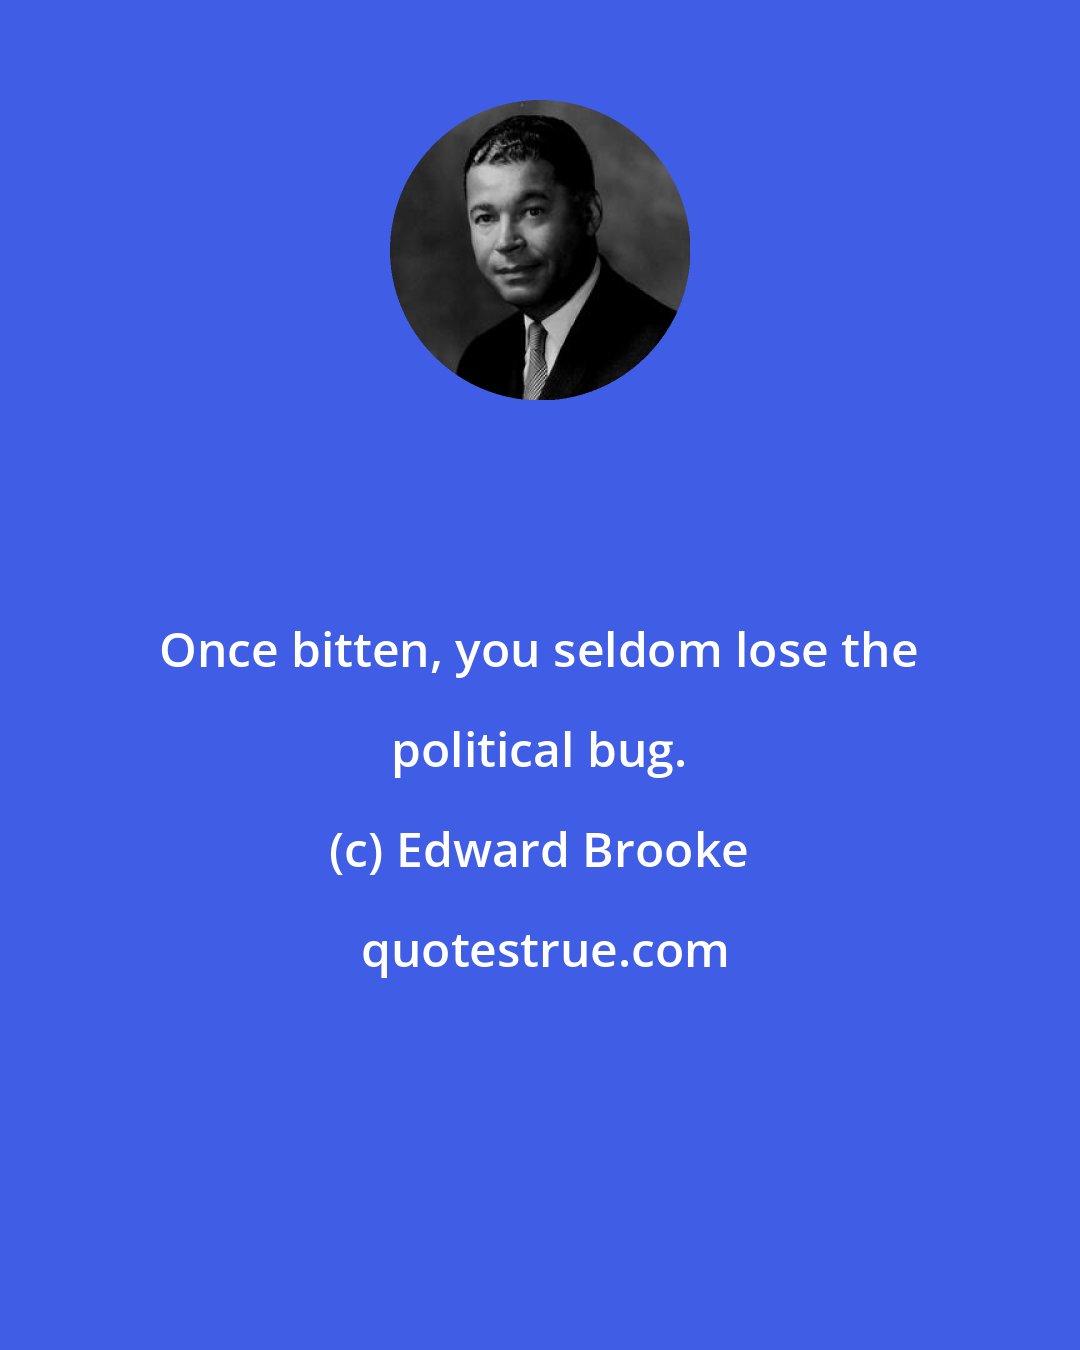 Edward Brooke: Once bitten, you seldom lose the political bug.